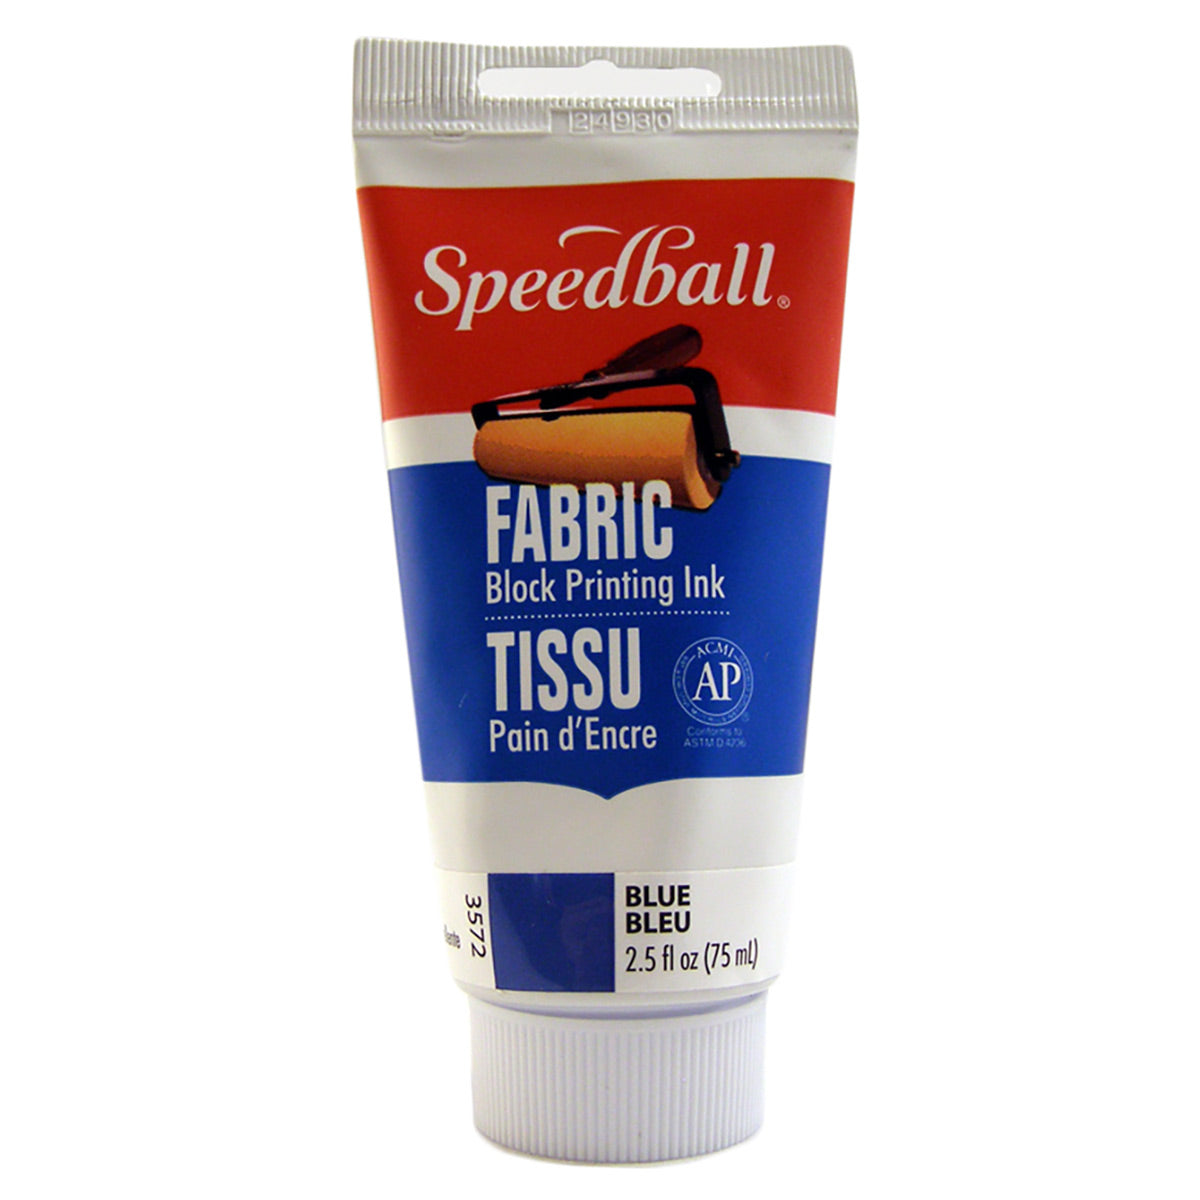 Speedball - Fabric Block Druckfarbe 75ml (2.5oz) - Blau